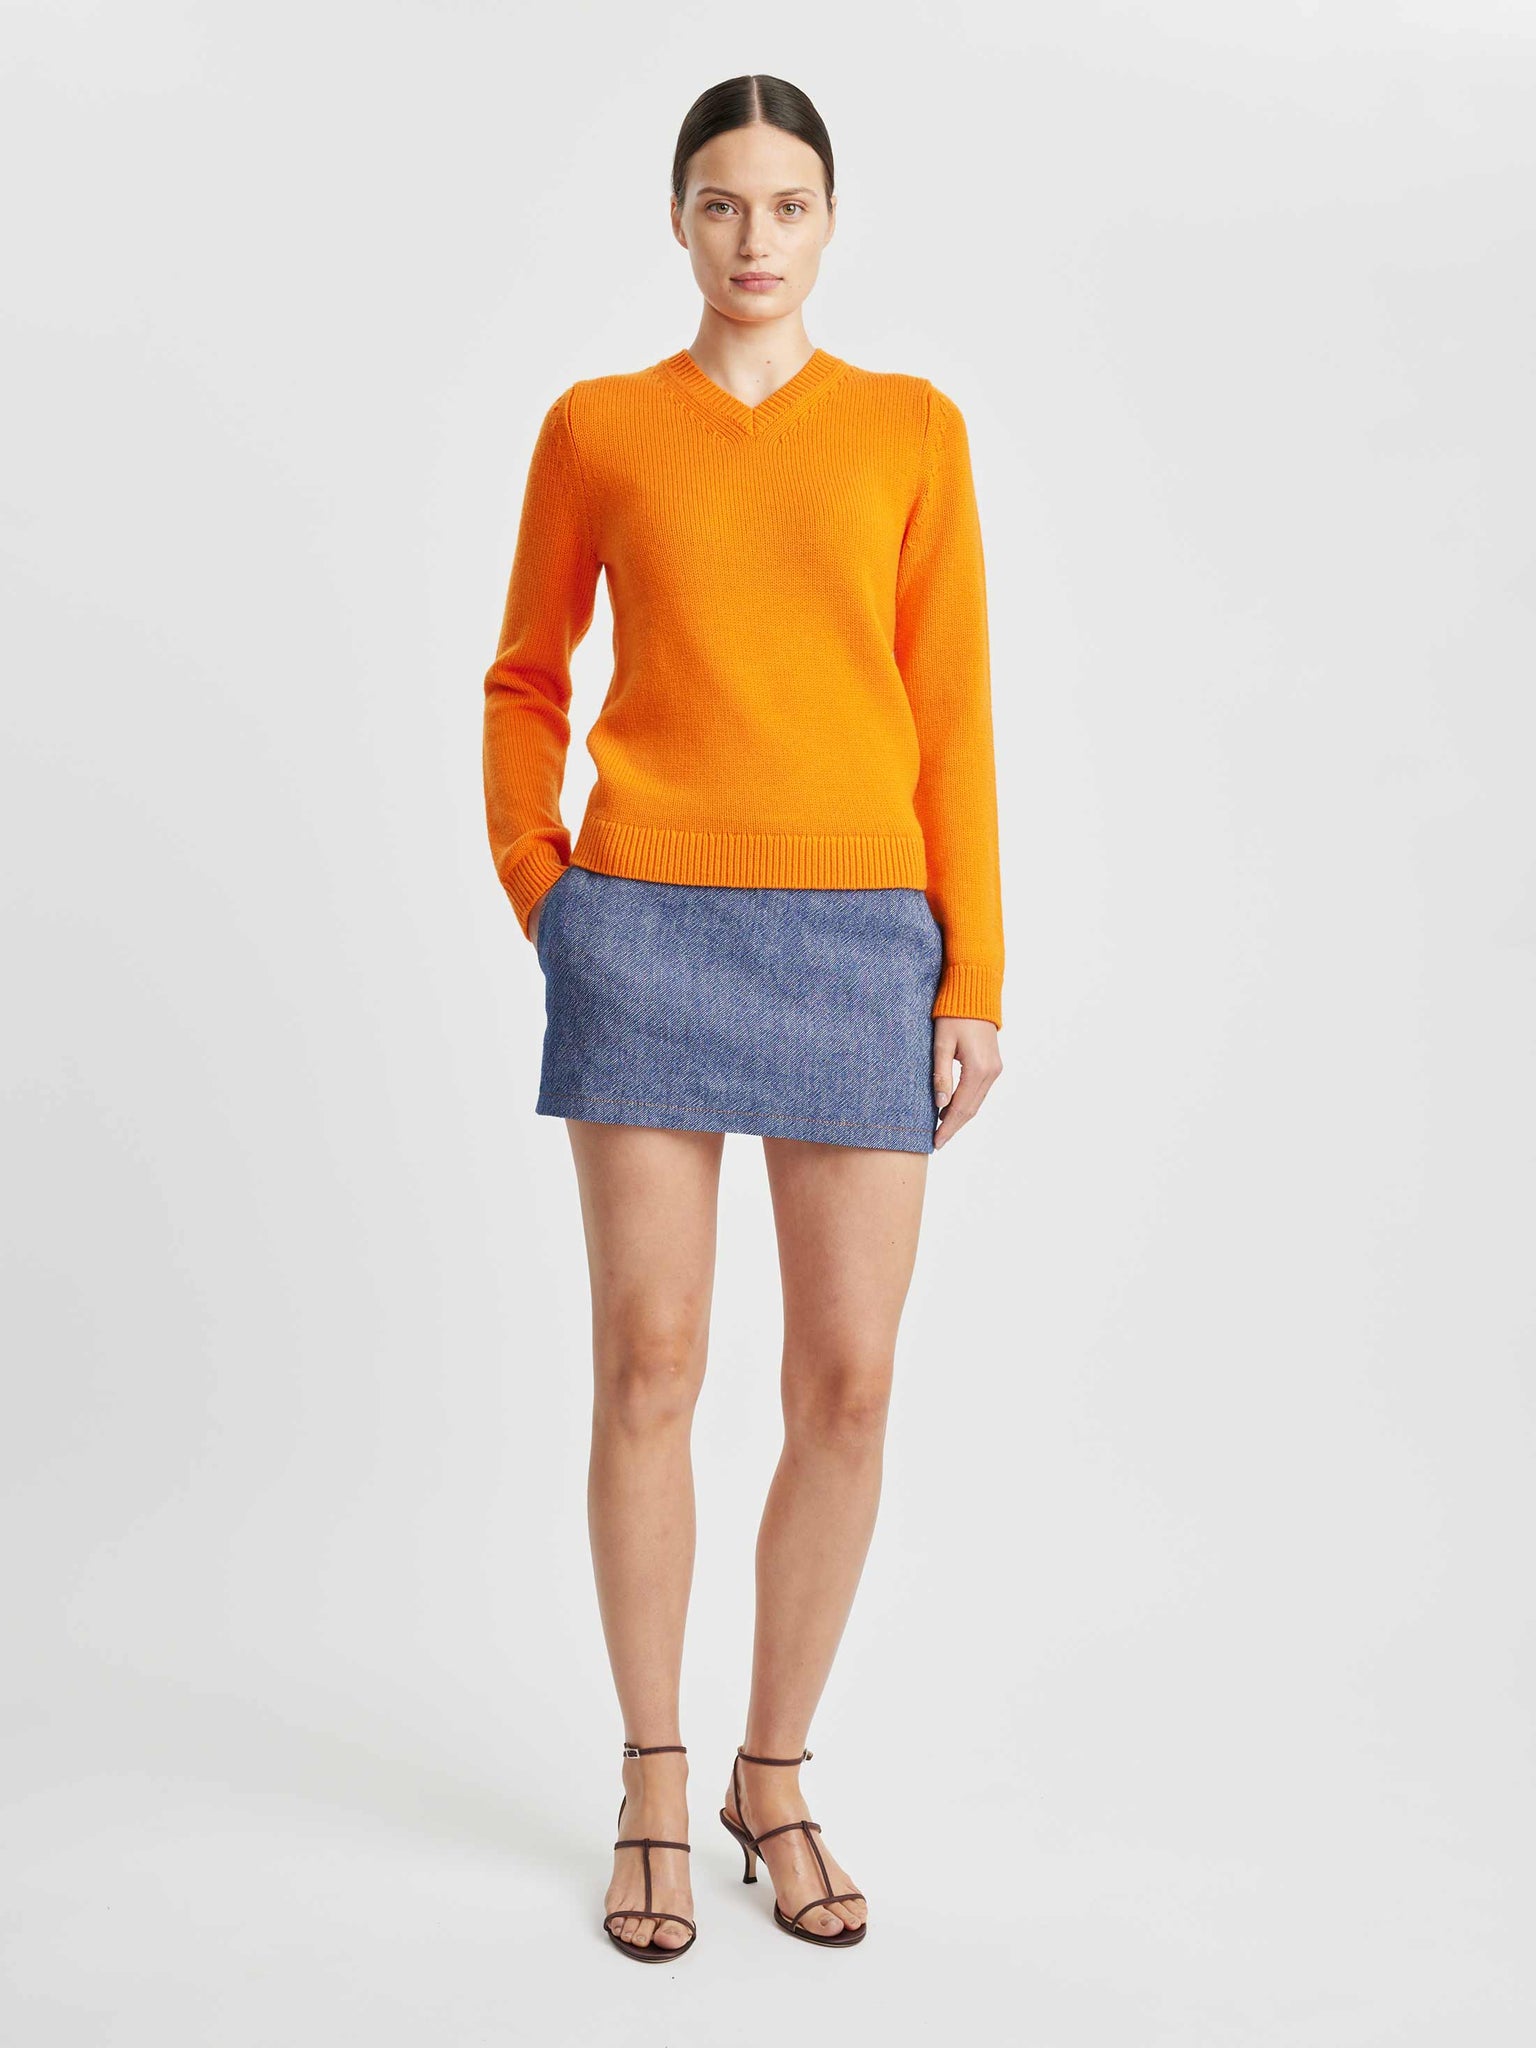 Pace Orange Knitted Jumper | Emilia Wickstead